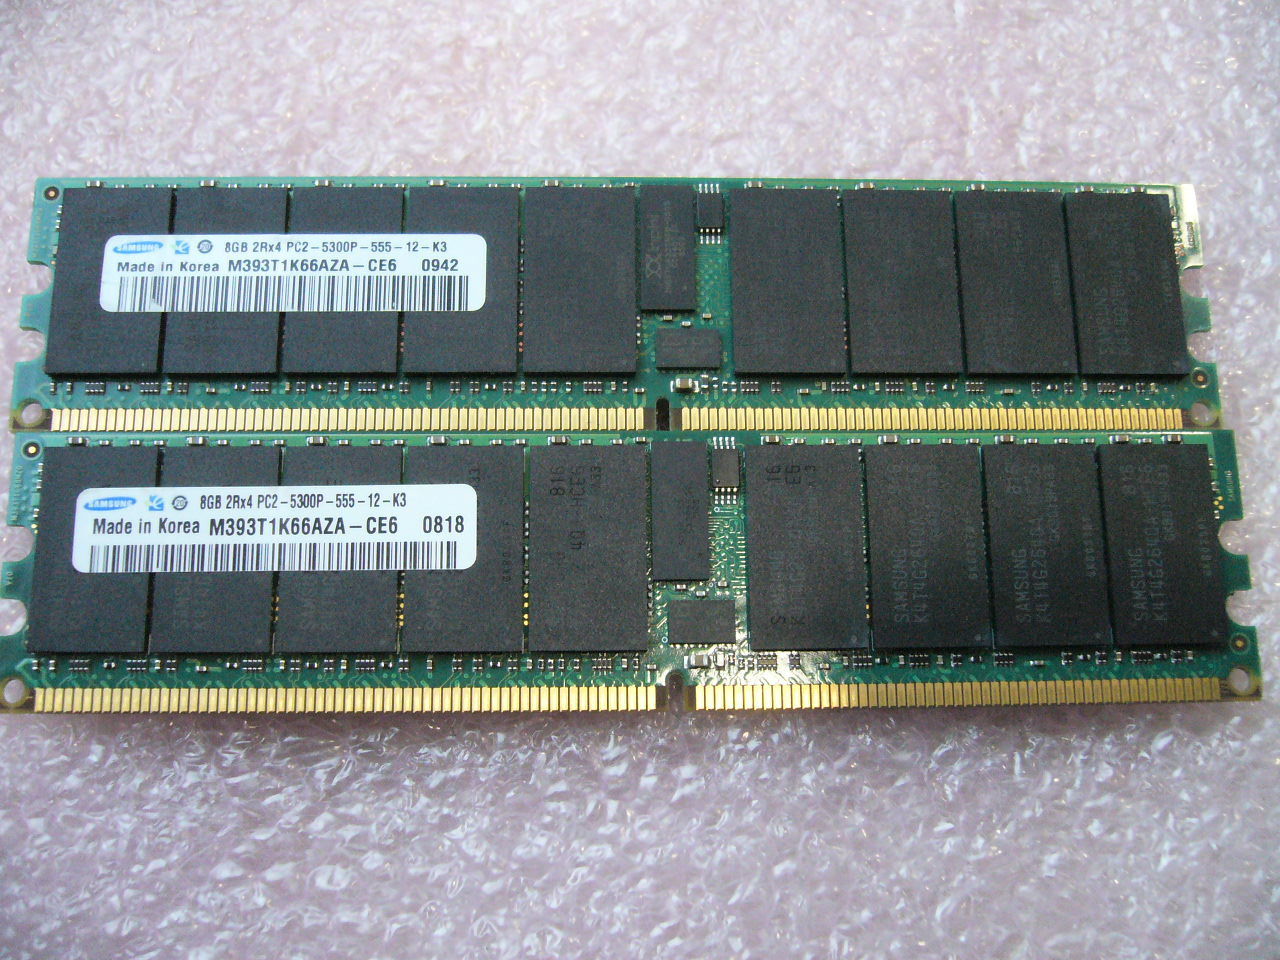 QTY 1x 8GB DDR2 PC2-5300P 2Rx4 ECC Registered Server memory M393T1K66AZA-CE6 - Click Image to Close